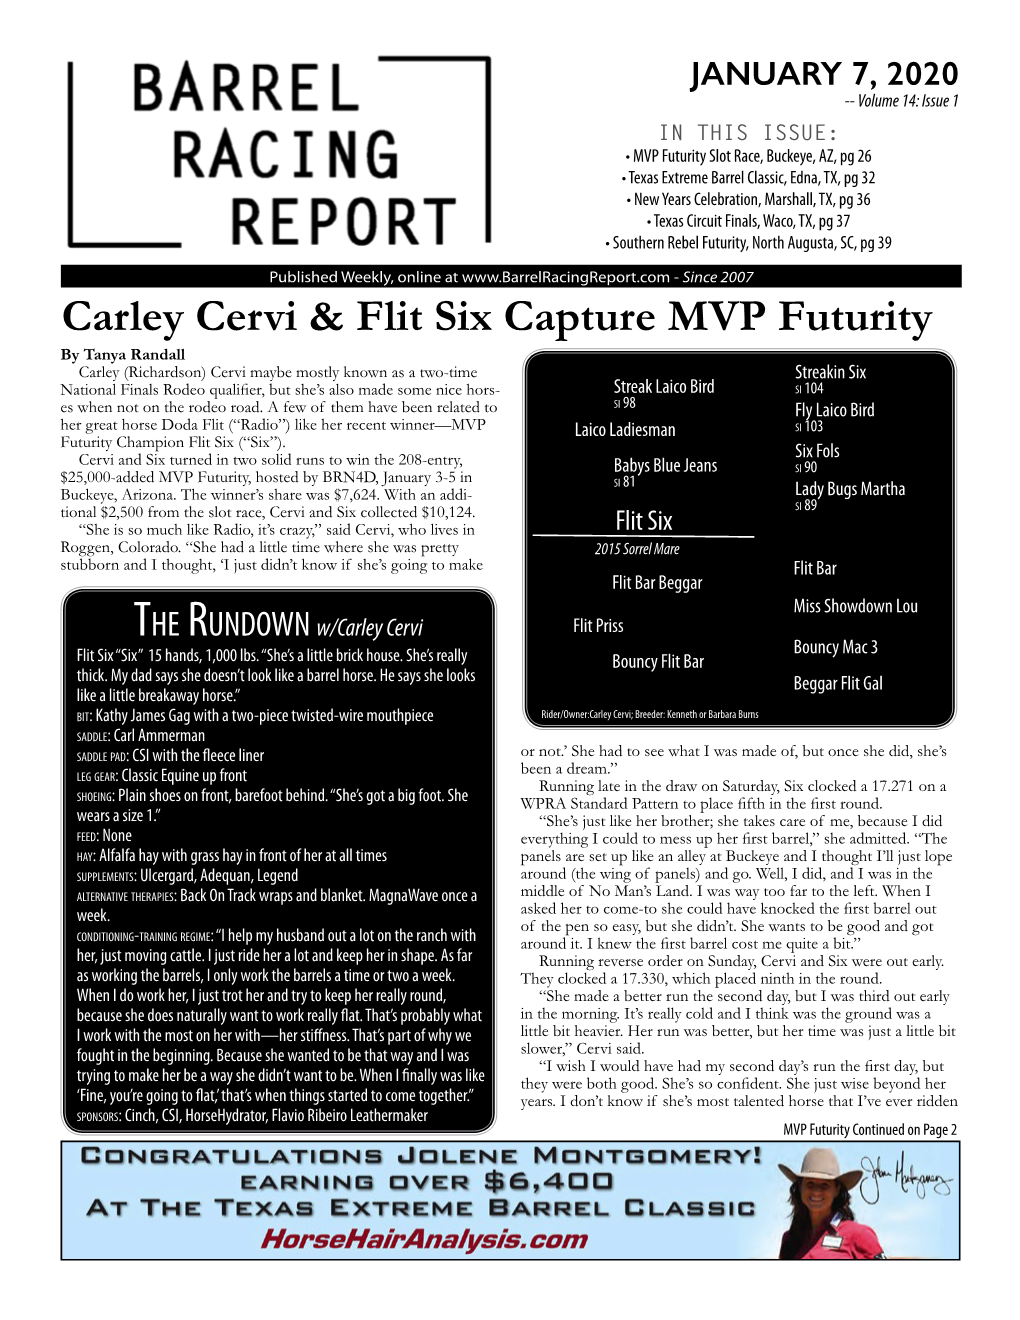 Carley Cervi & Flit Six Capture MVP Futurity